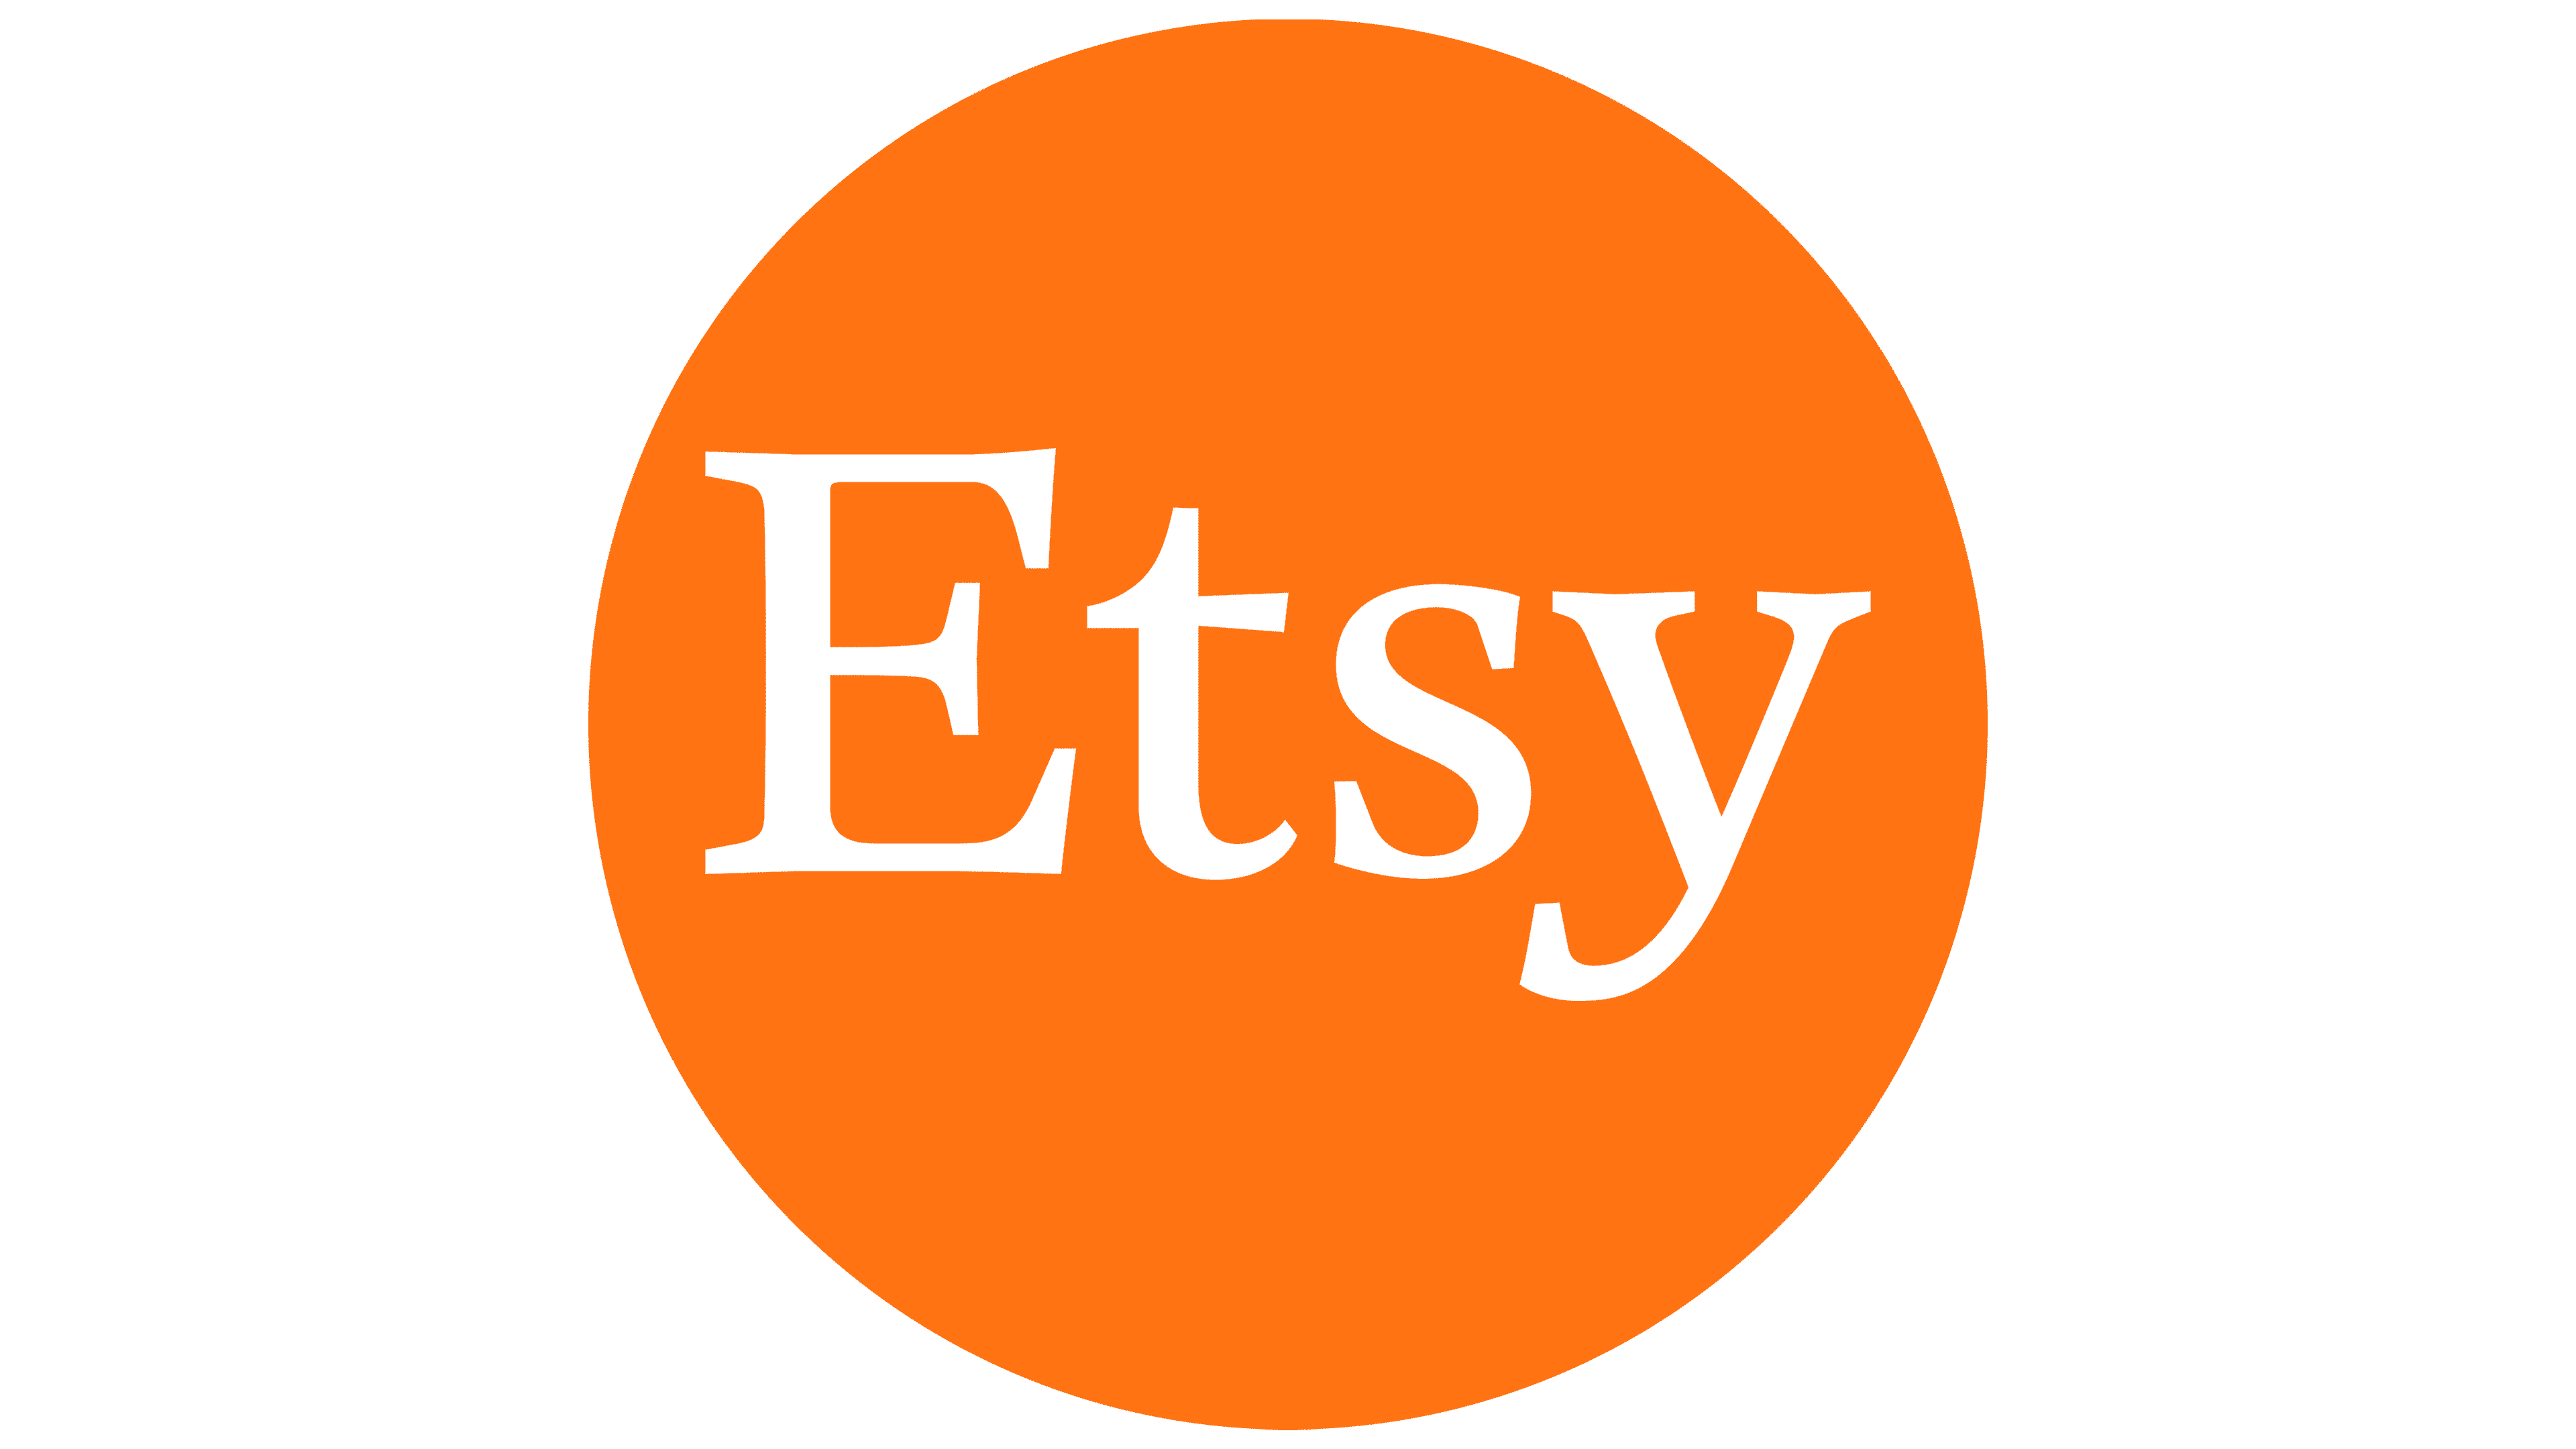 Etsy largest online marketplaces